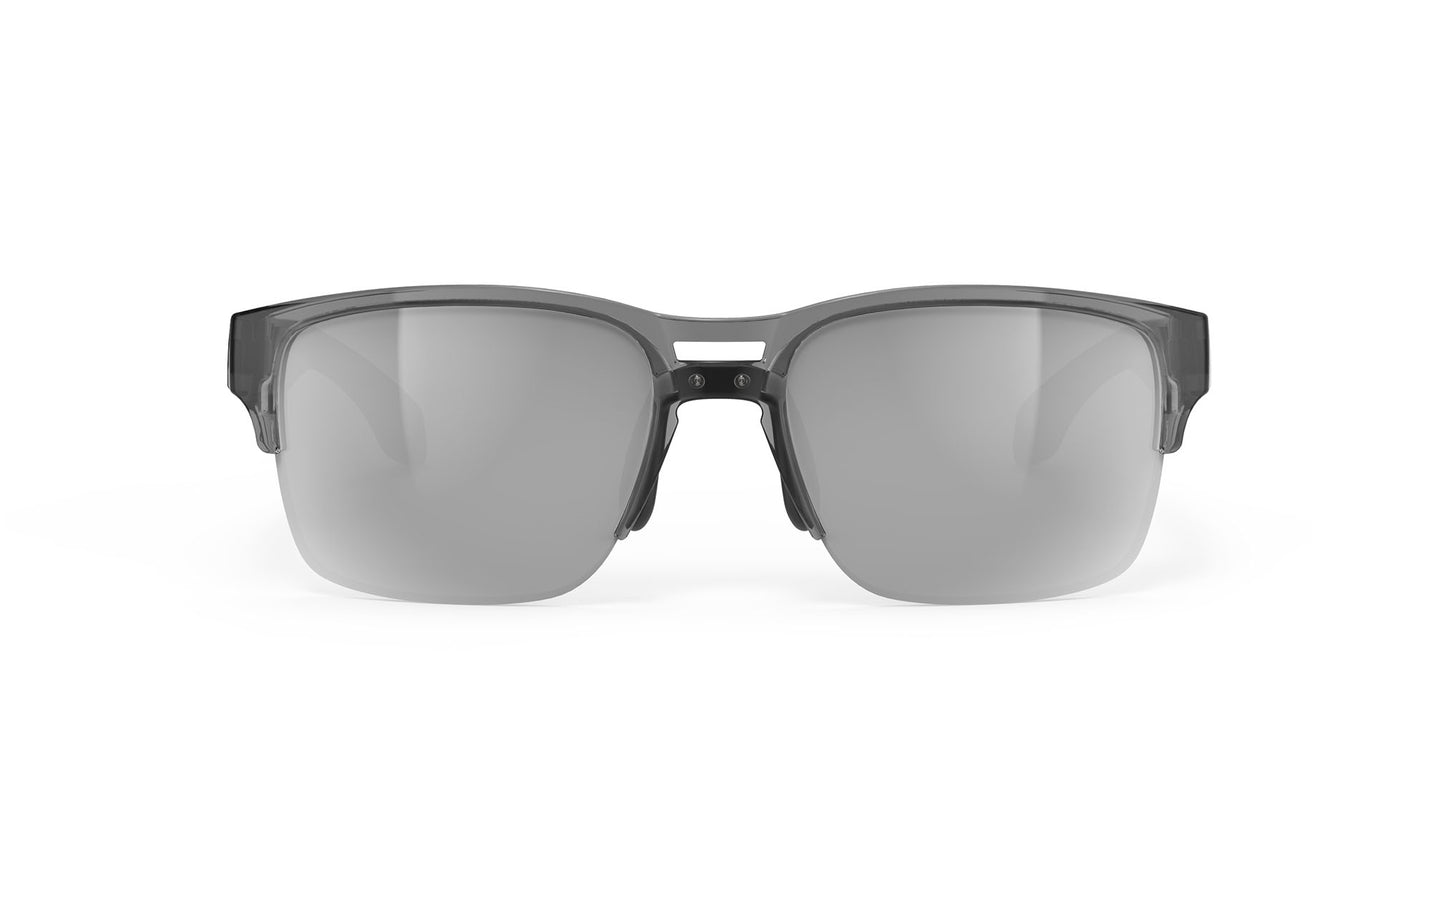 Rudy Project Spinair 58 Crystal Ash Deg Rp Optics Laser Black Sunglasses